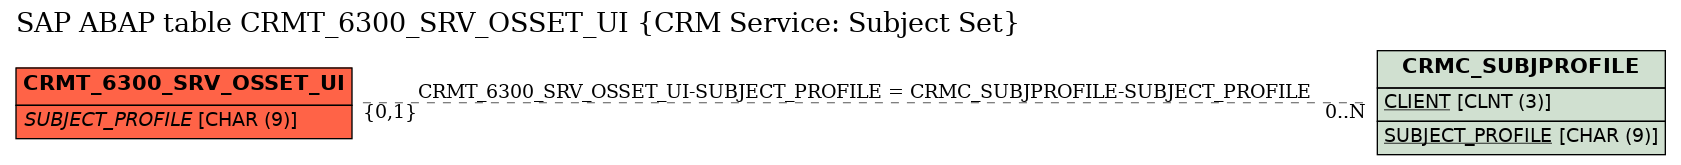 E-R Diagram for table CRMT_6300_SRV_OSSET_UI (CRM Service: Subject Set)